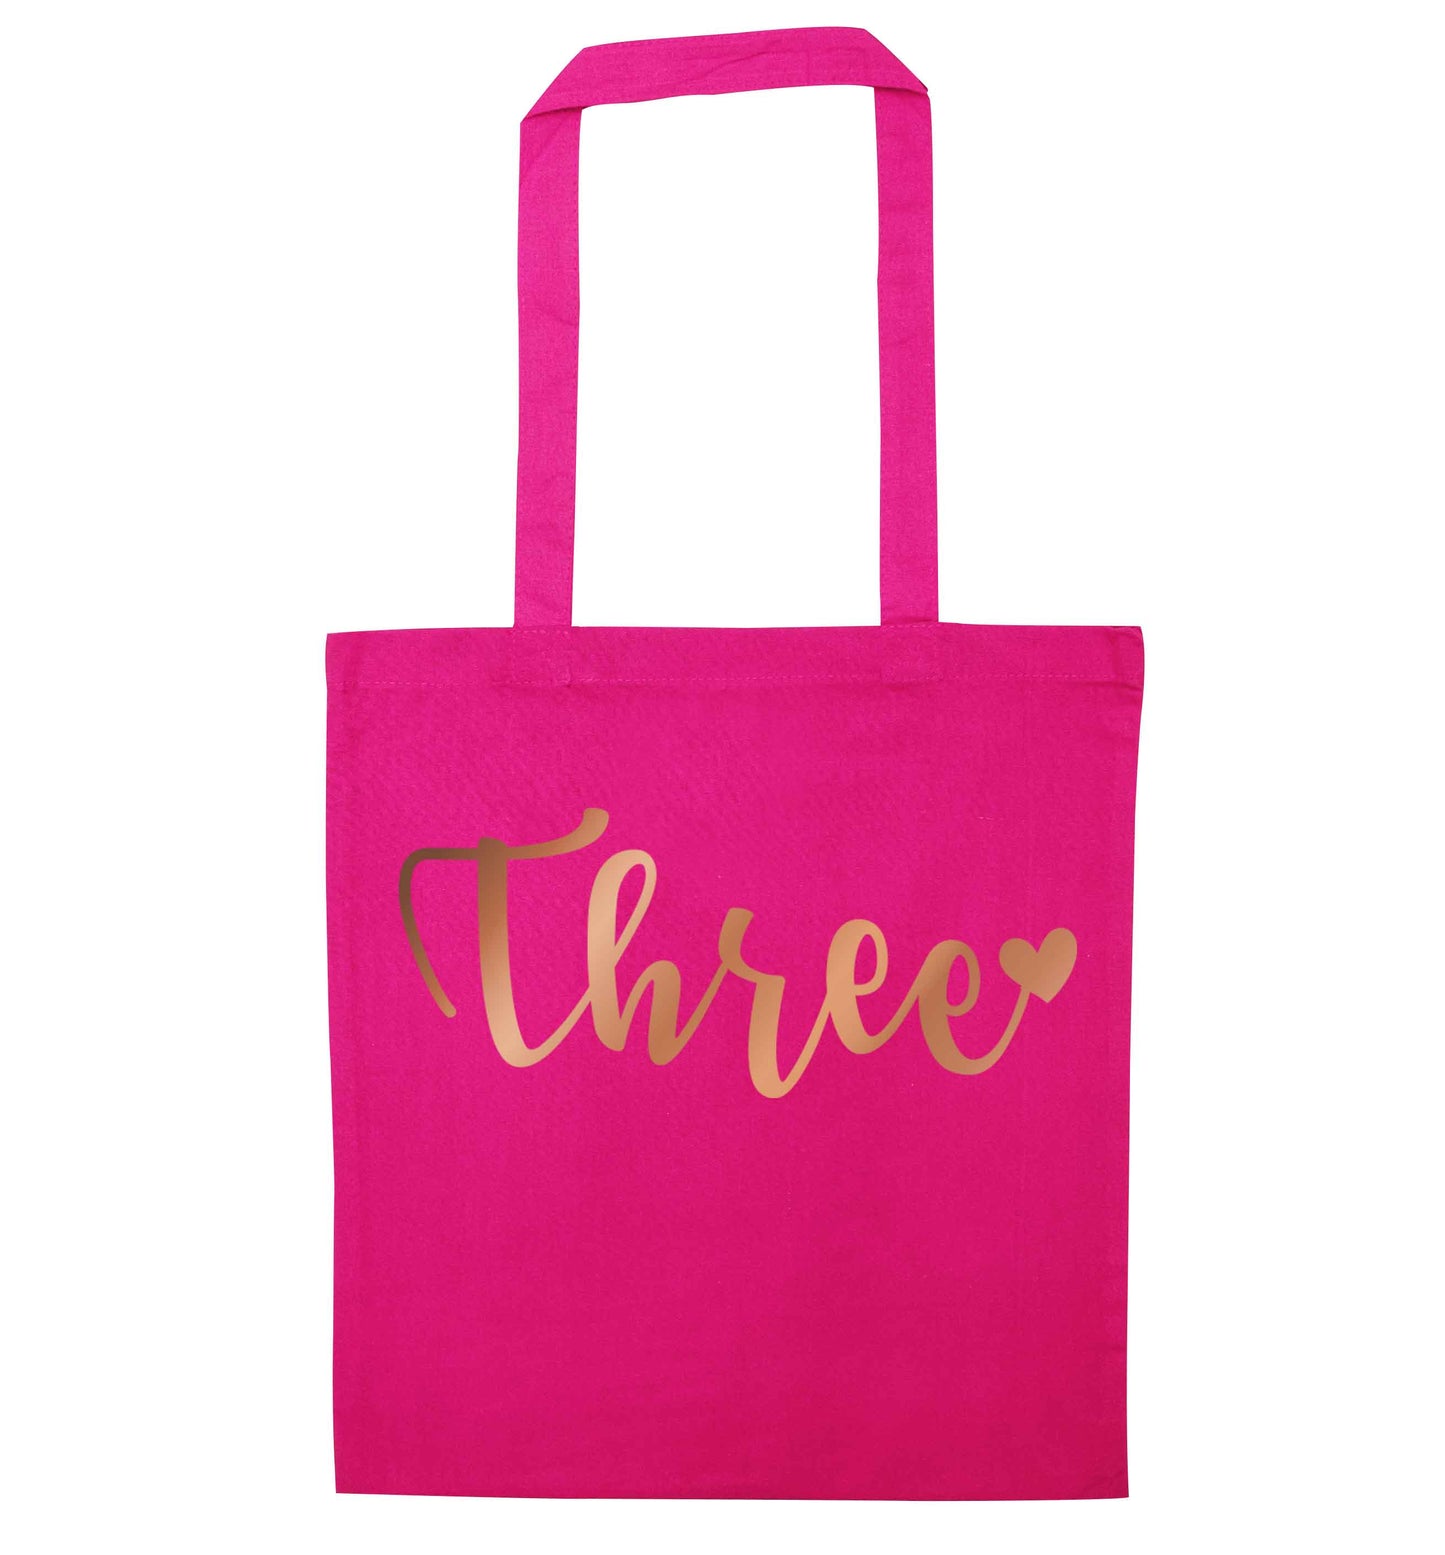 Three rose gold pink tote bag